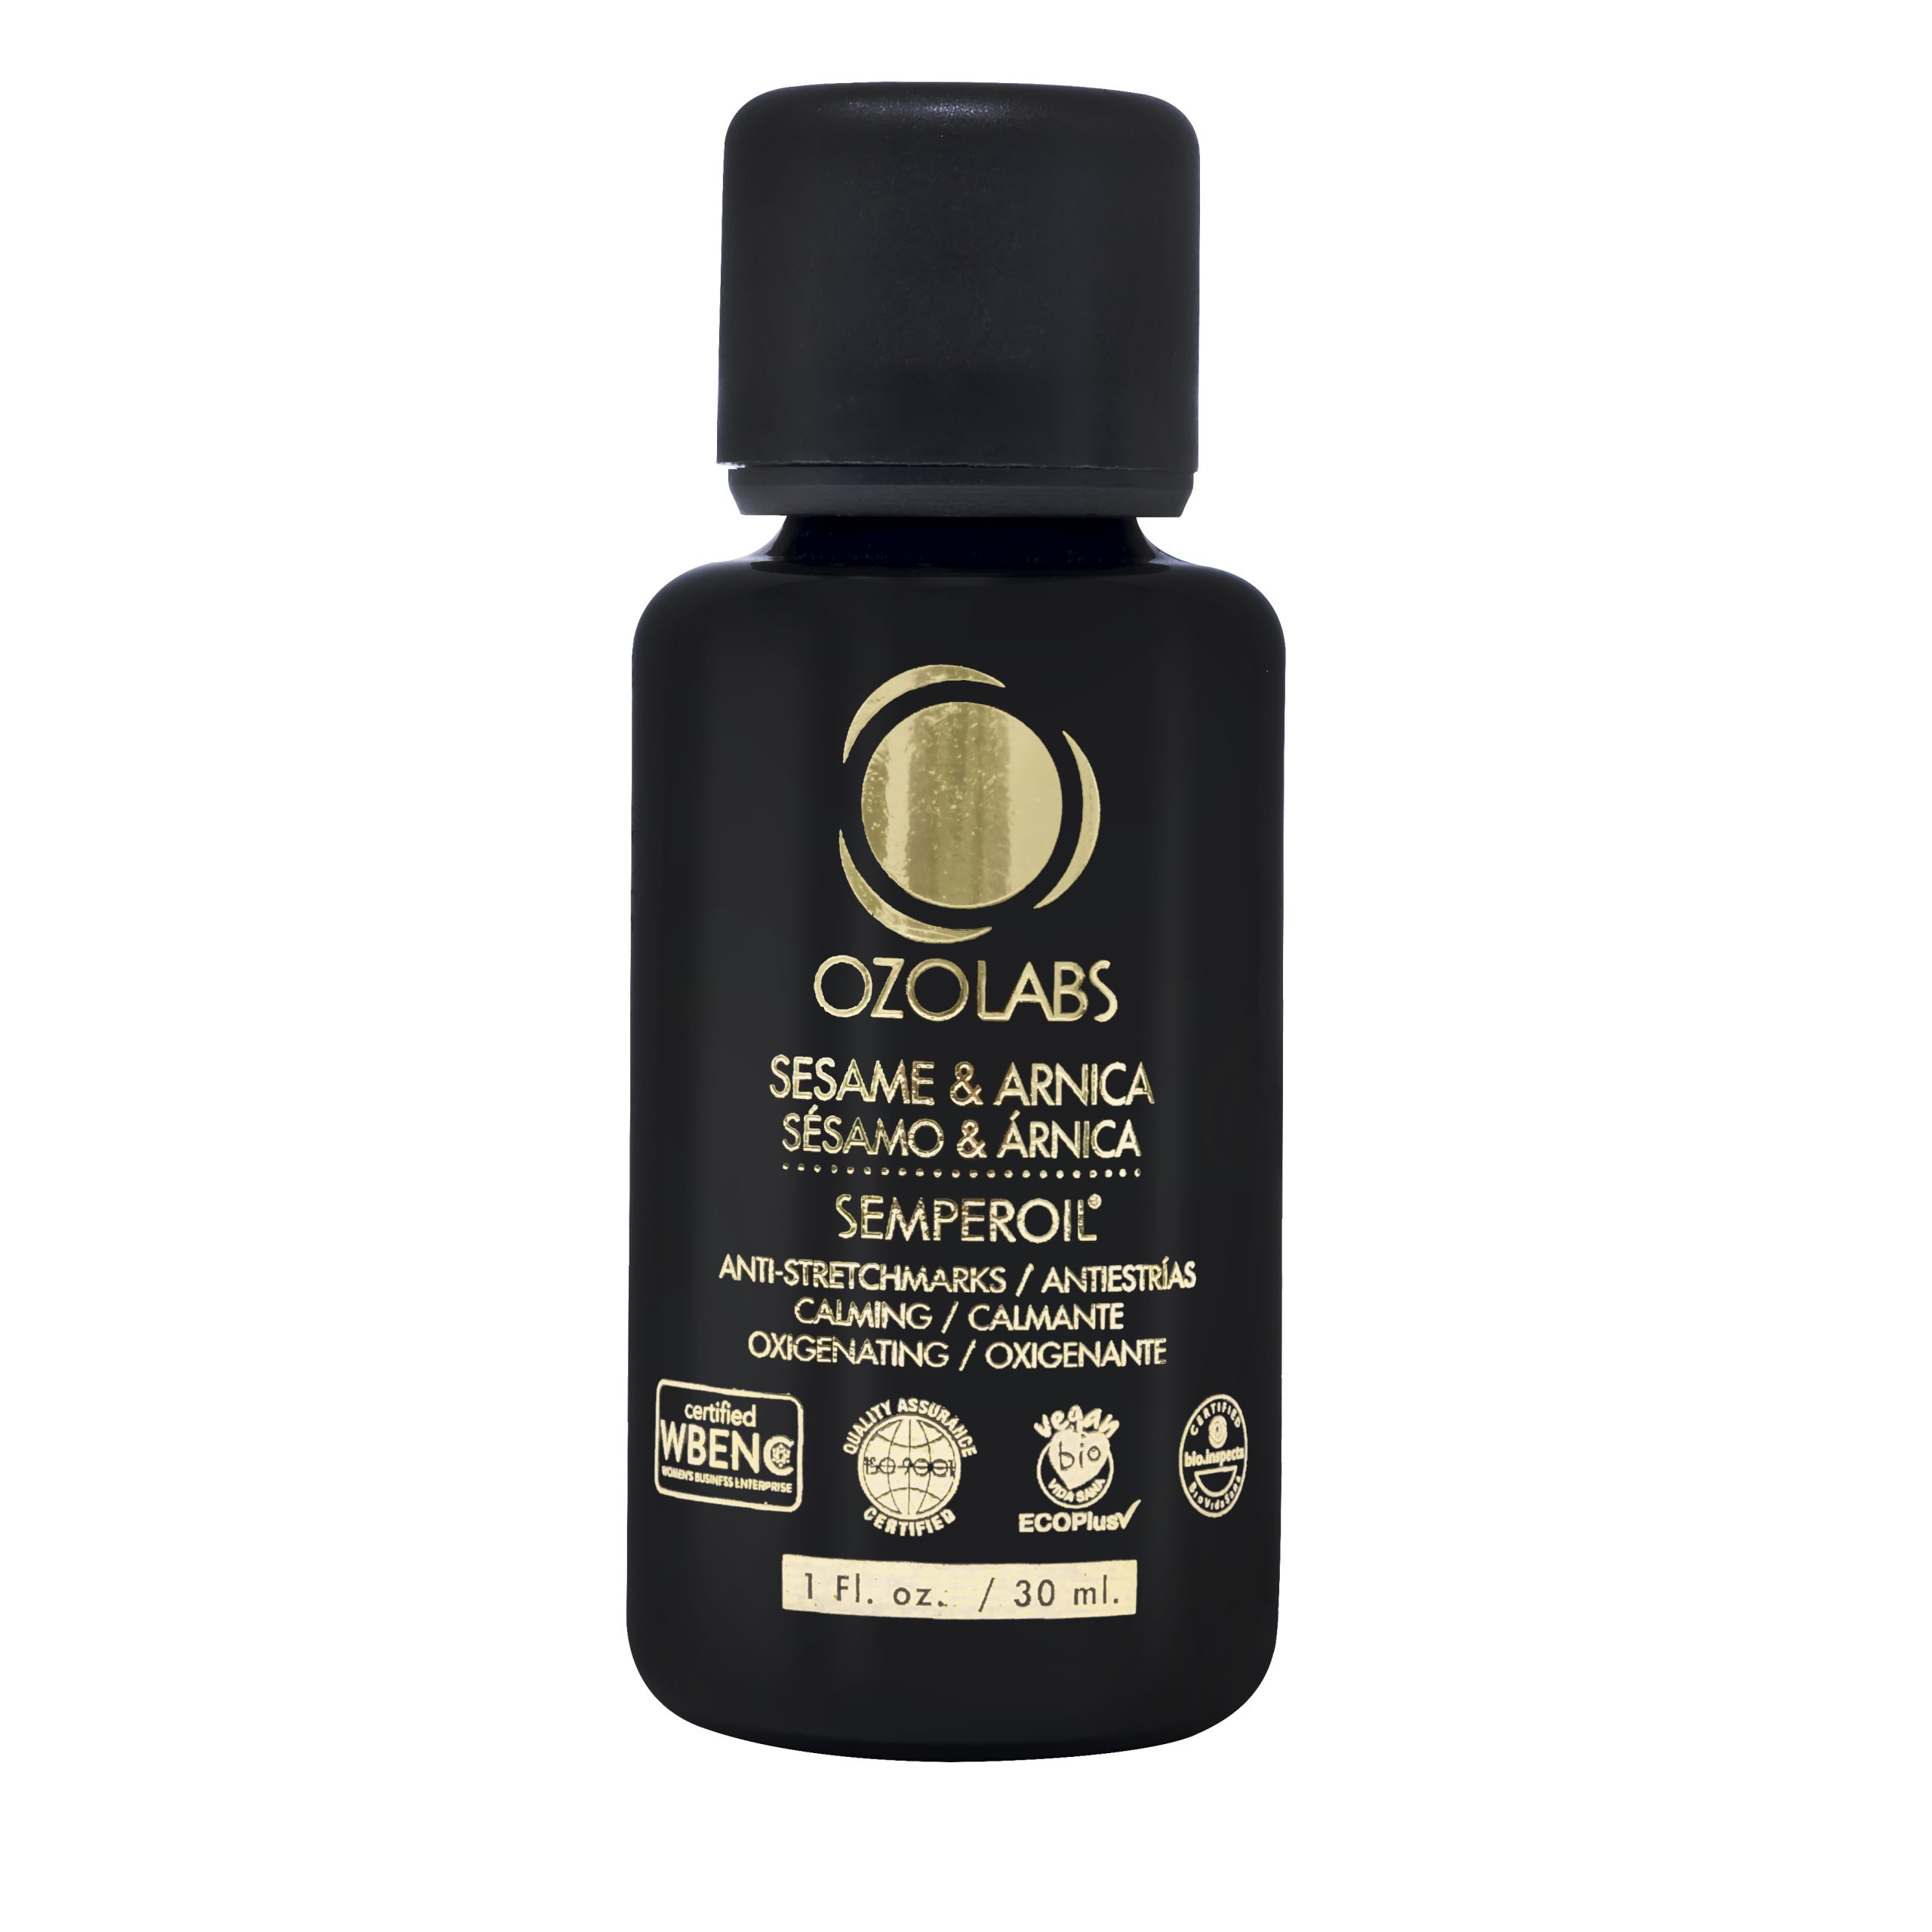 Sesame & Arnica Semperoil, 30 ml - Certified Organic Ozonated Oils Skin ...